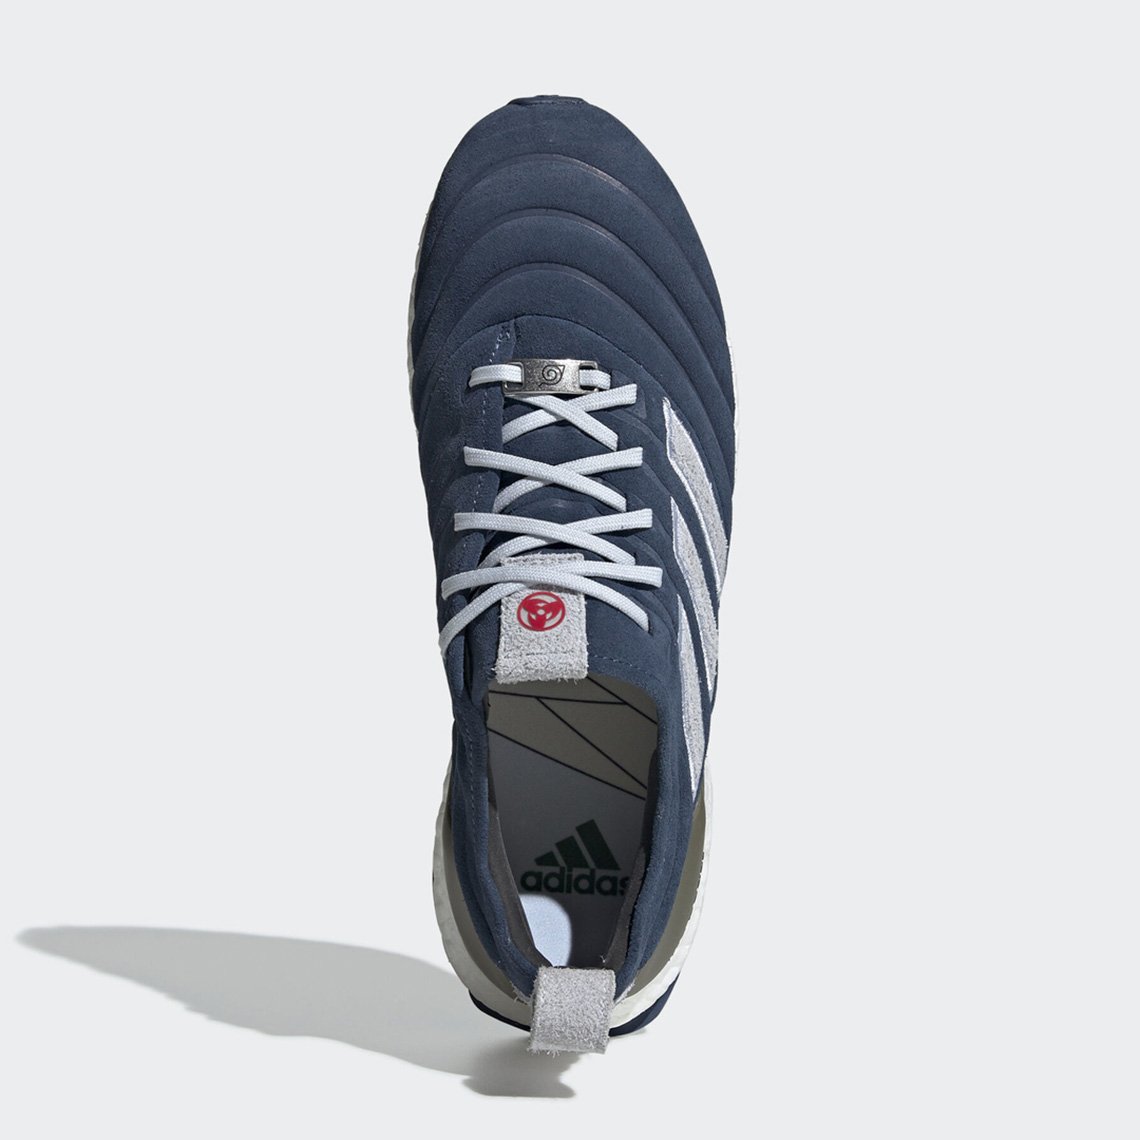 kakashi shoes adidas release date